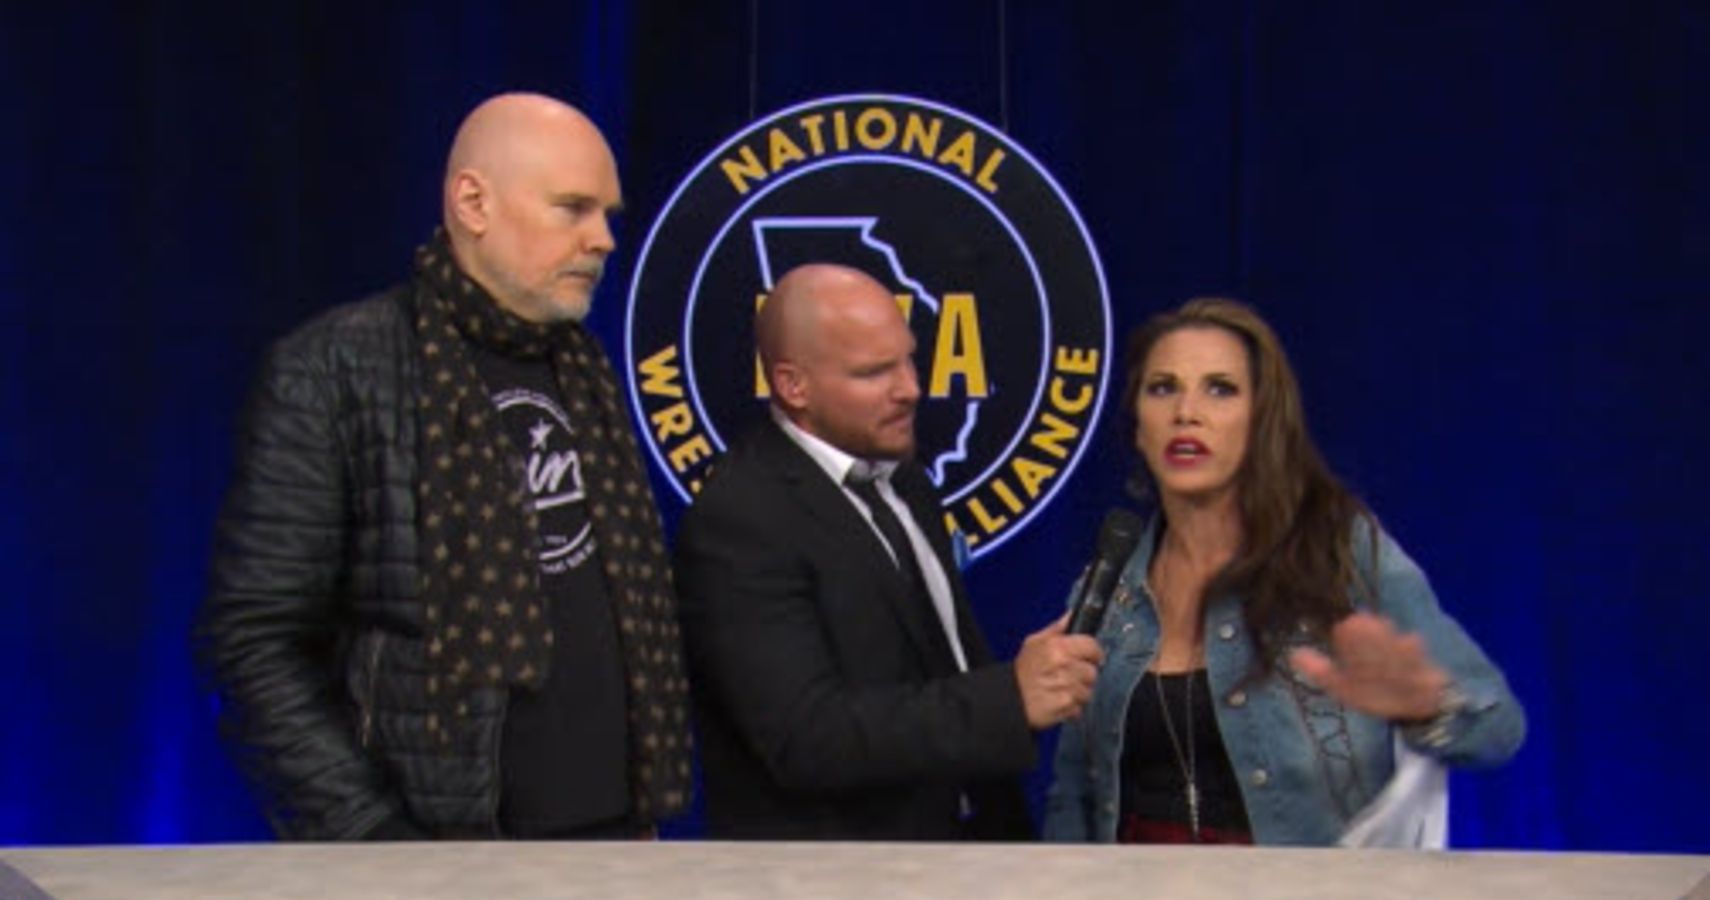 NWA President Billy Corgan with former WWE Superstar Mickie James